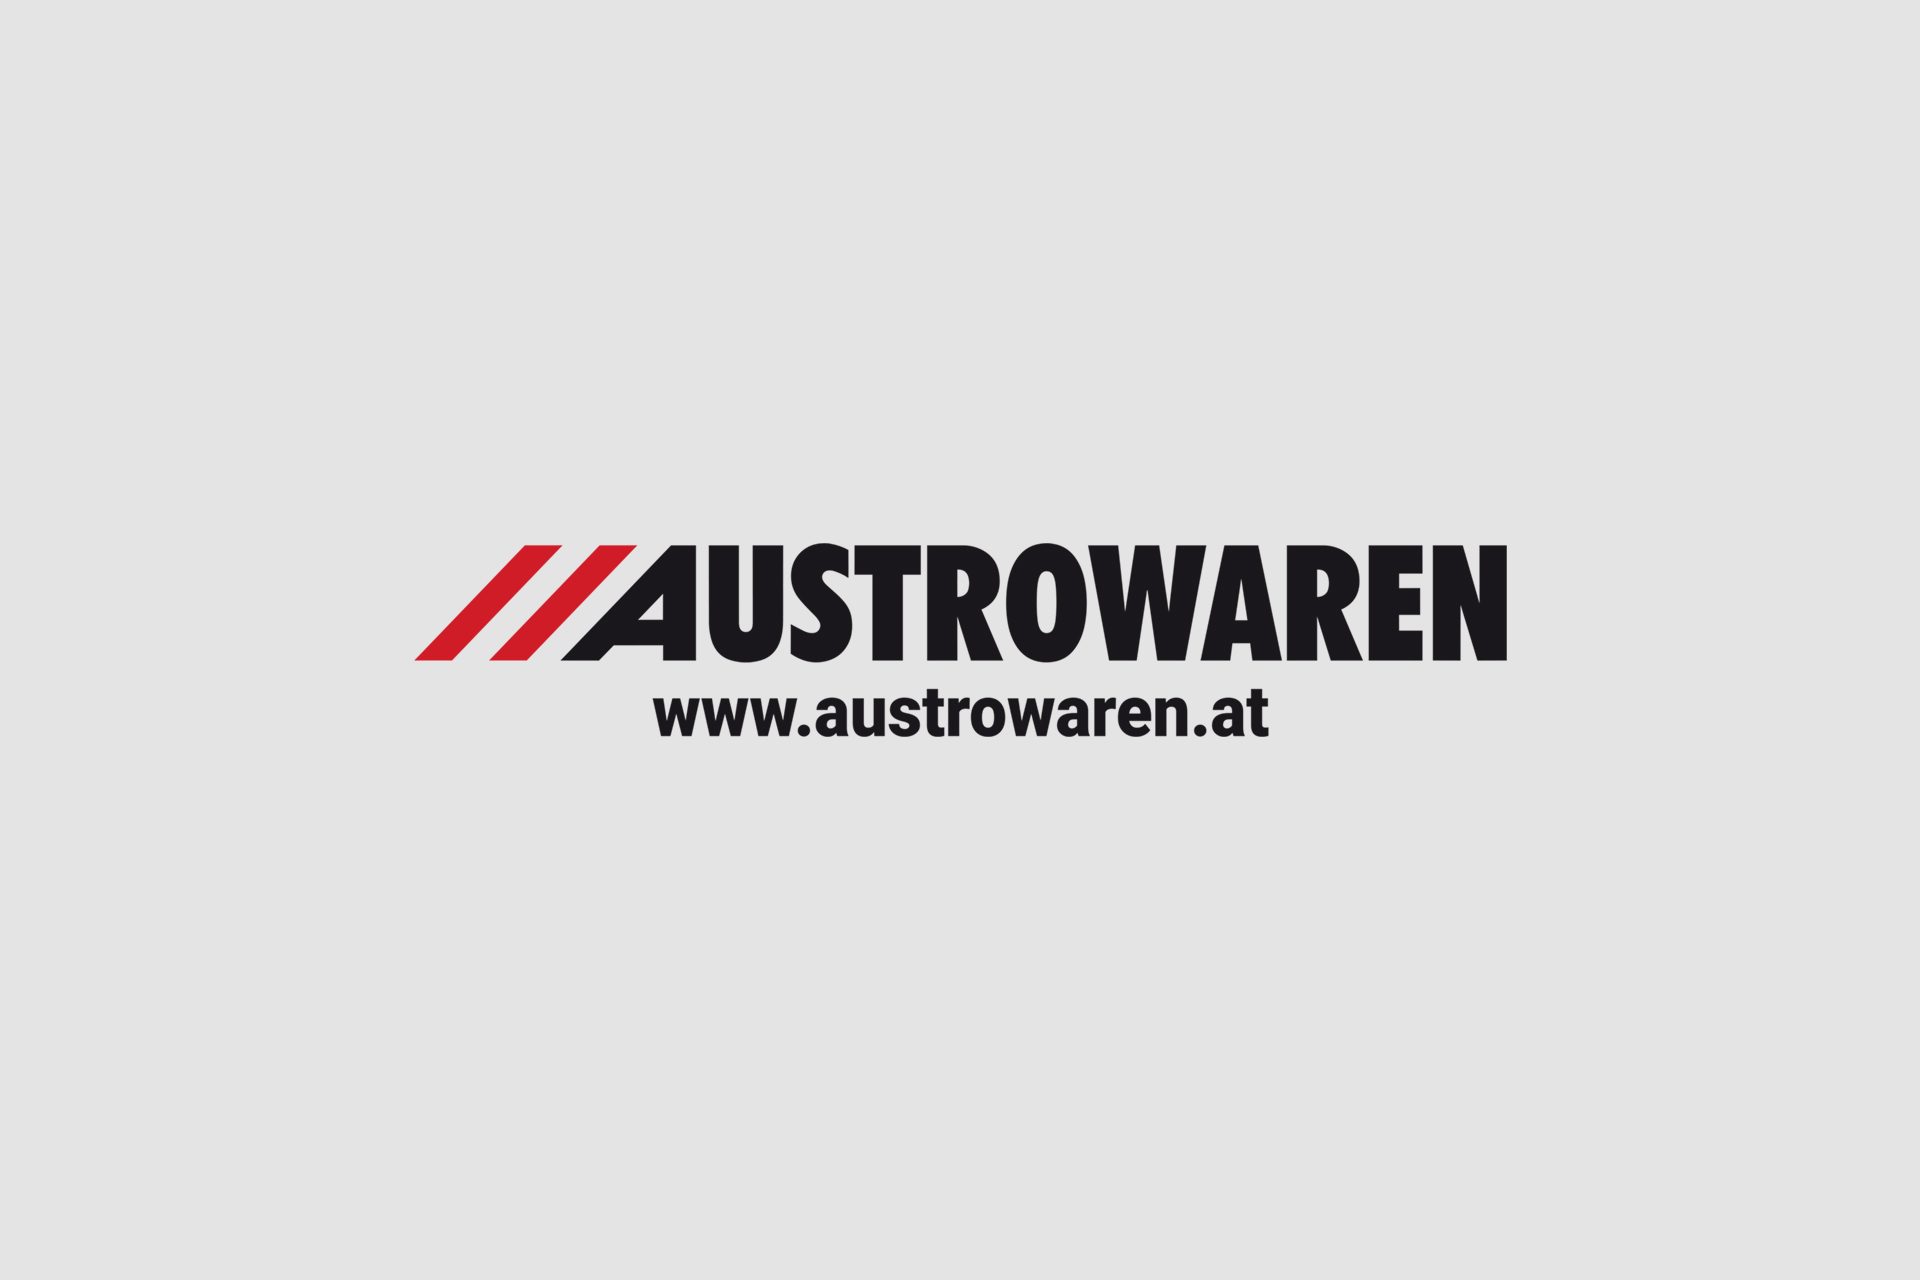 Austrowaren - Autobranding Logo